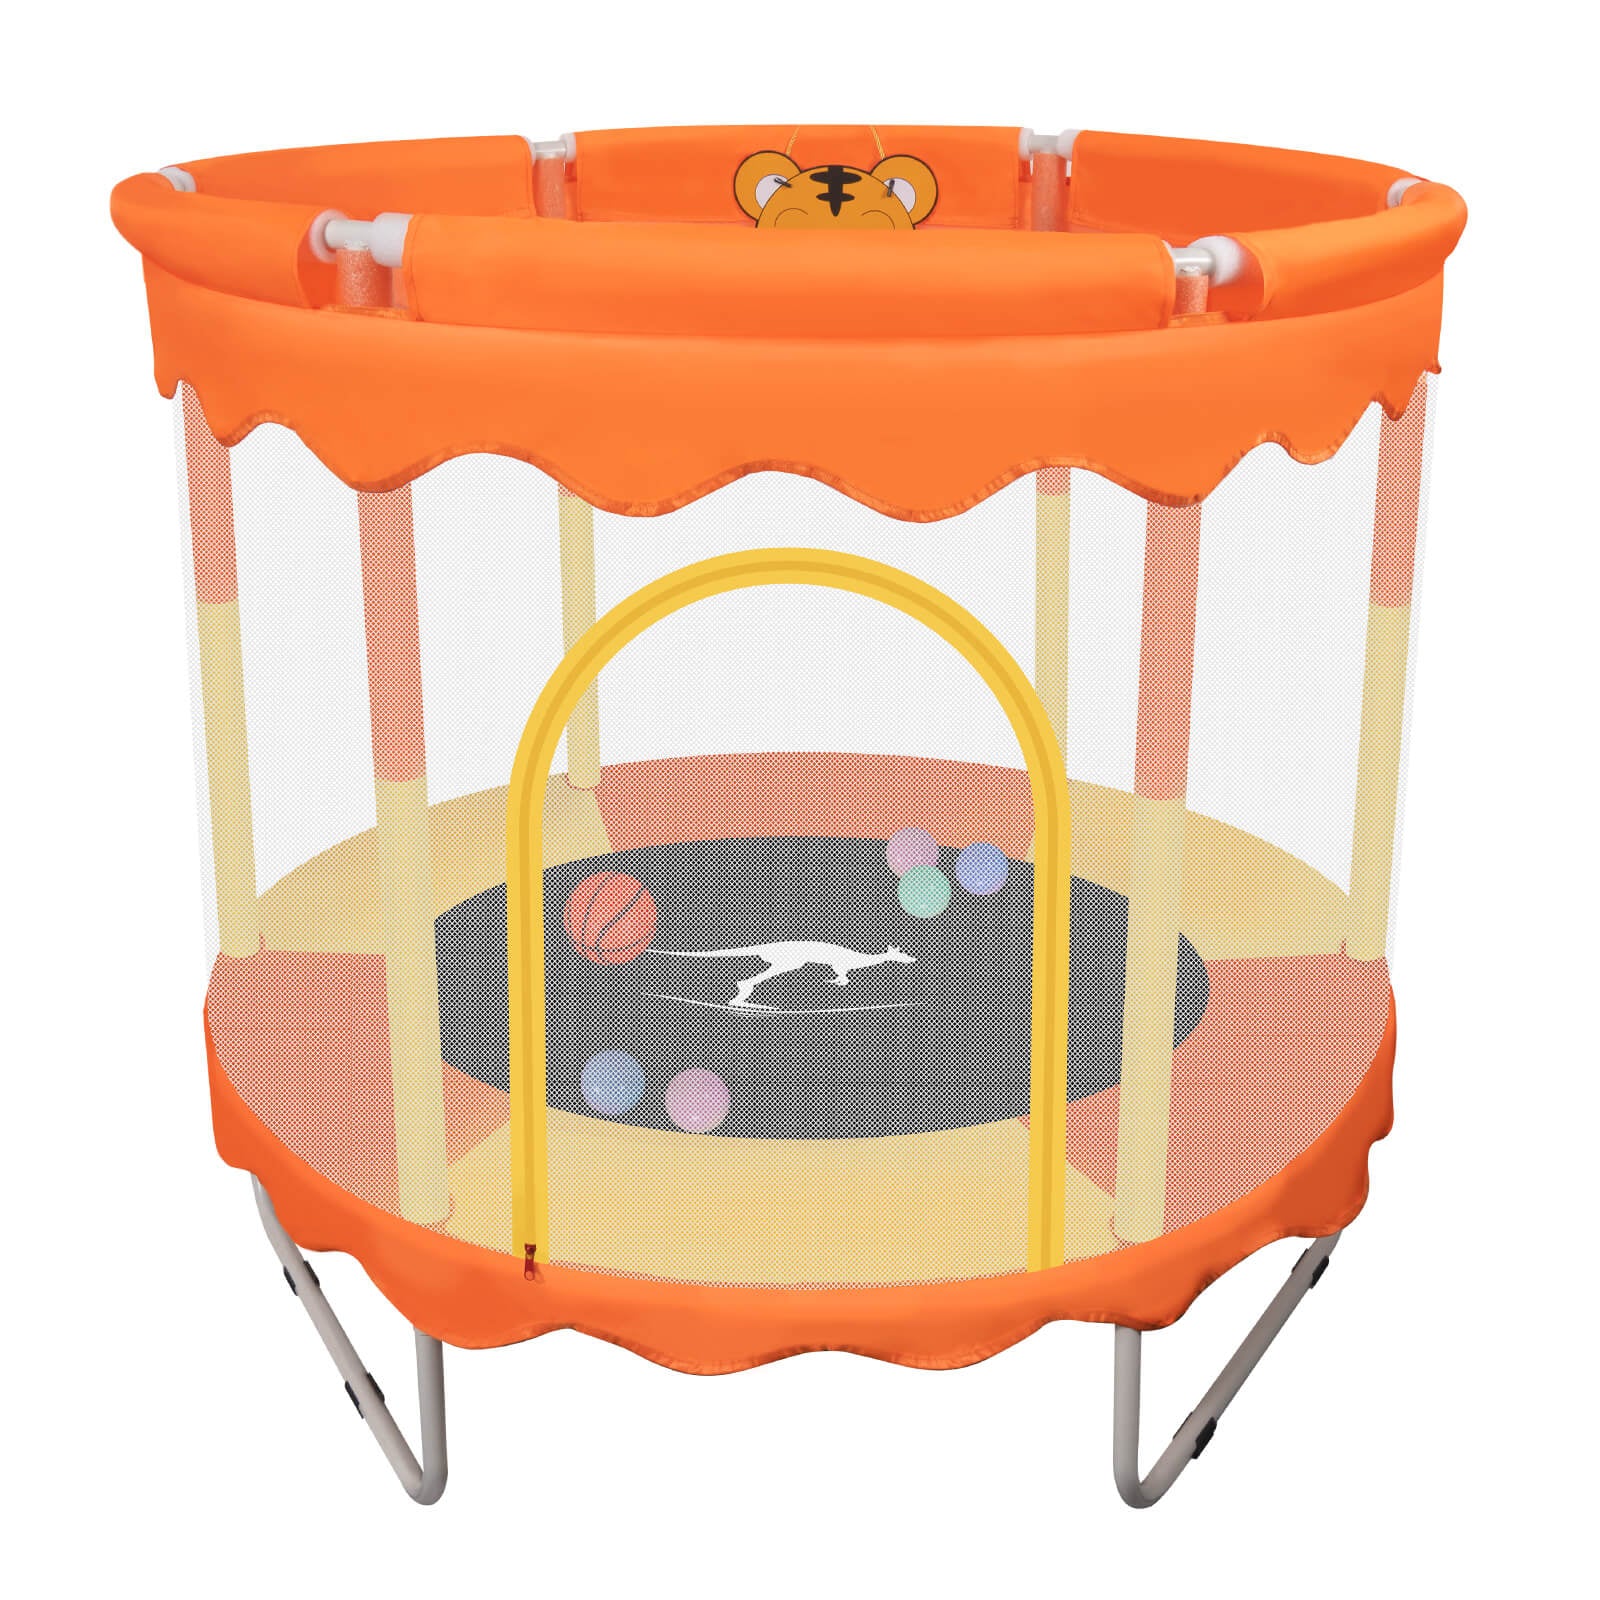 48" Toddler Recreation Trampoline with Basketball hoop, Enclosure Net